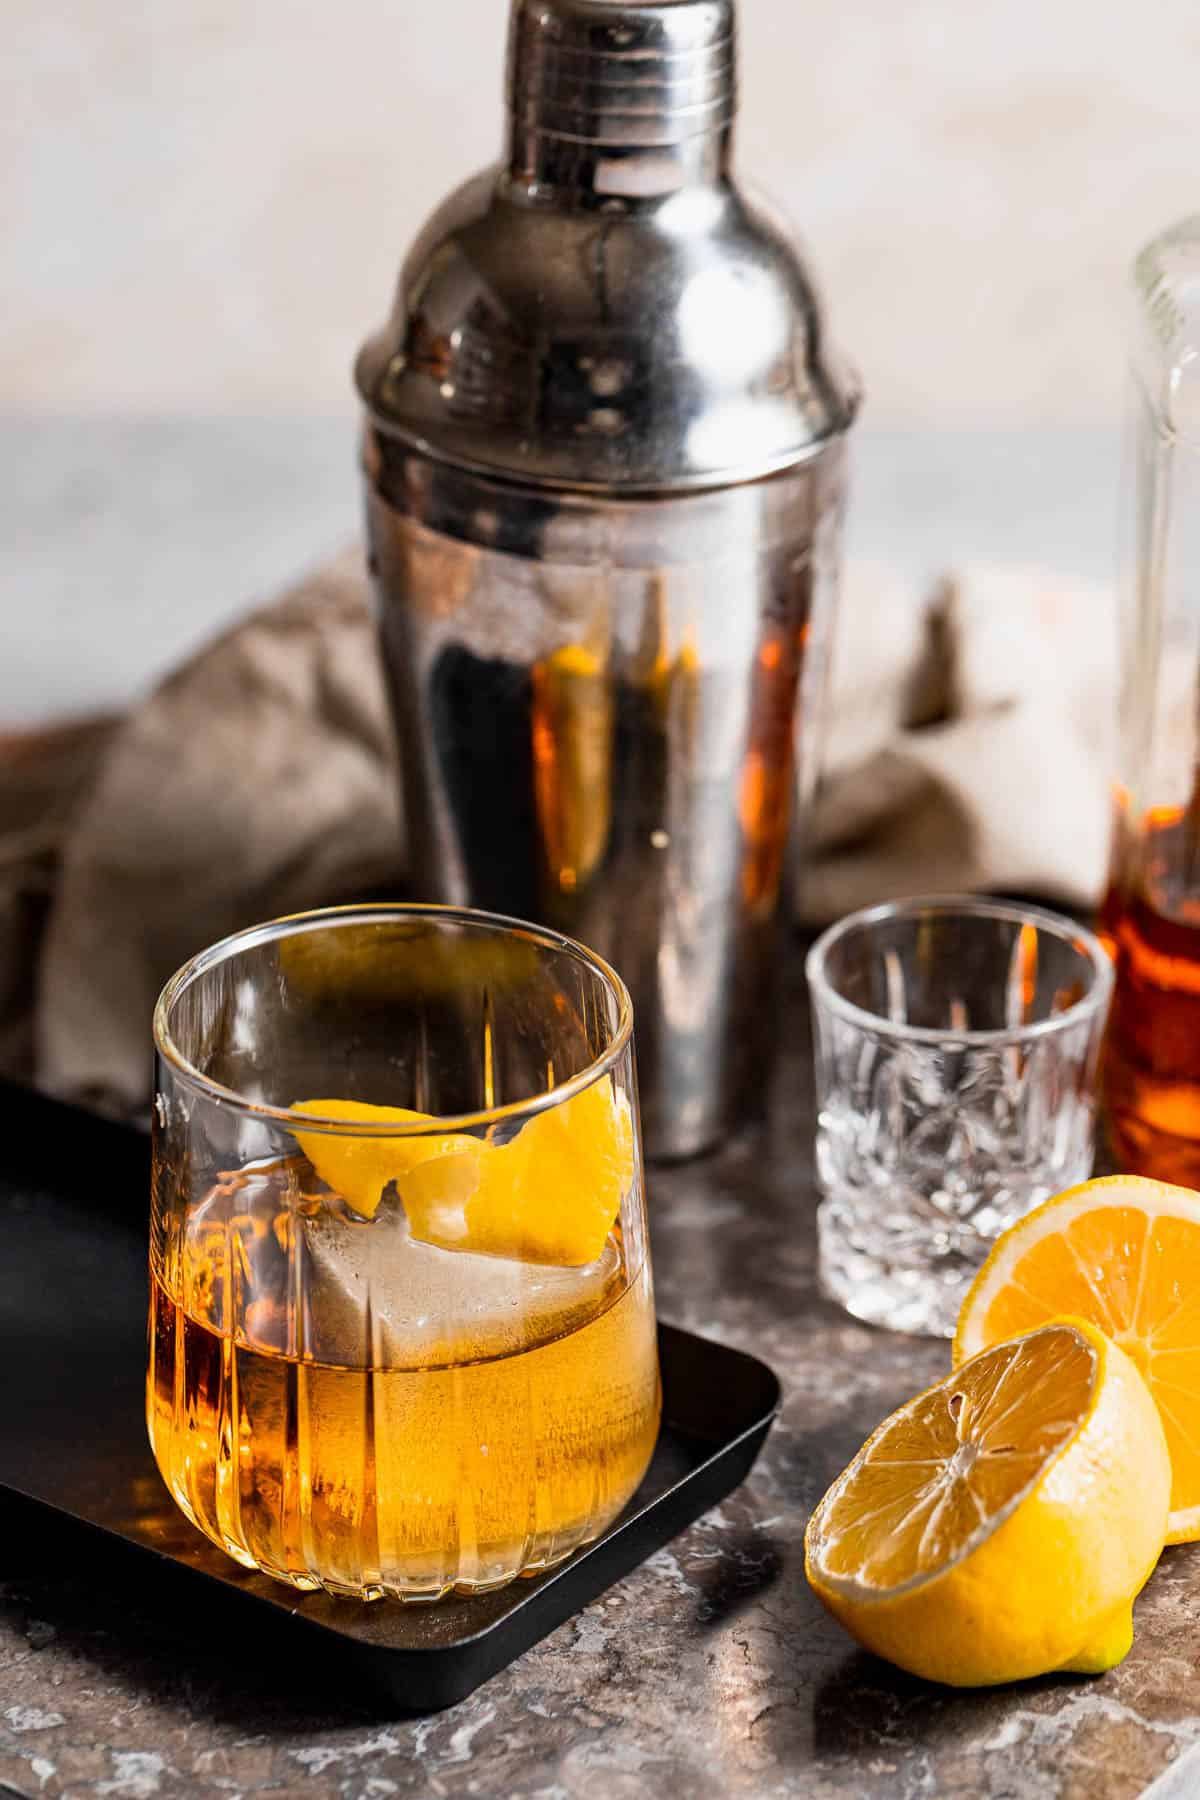 A cocktail garnished with orange zest on a black serving tray.